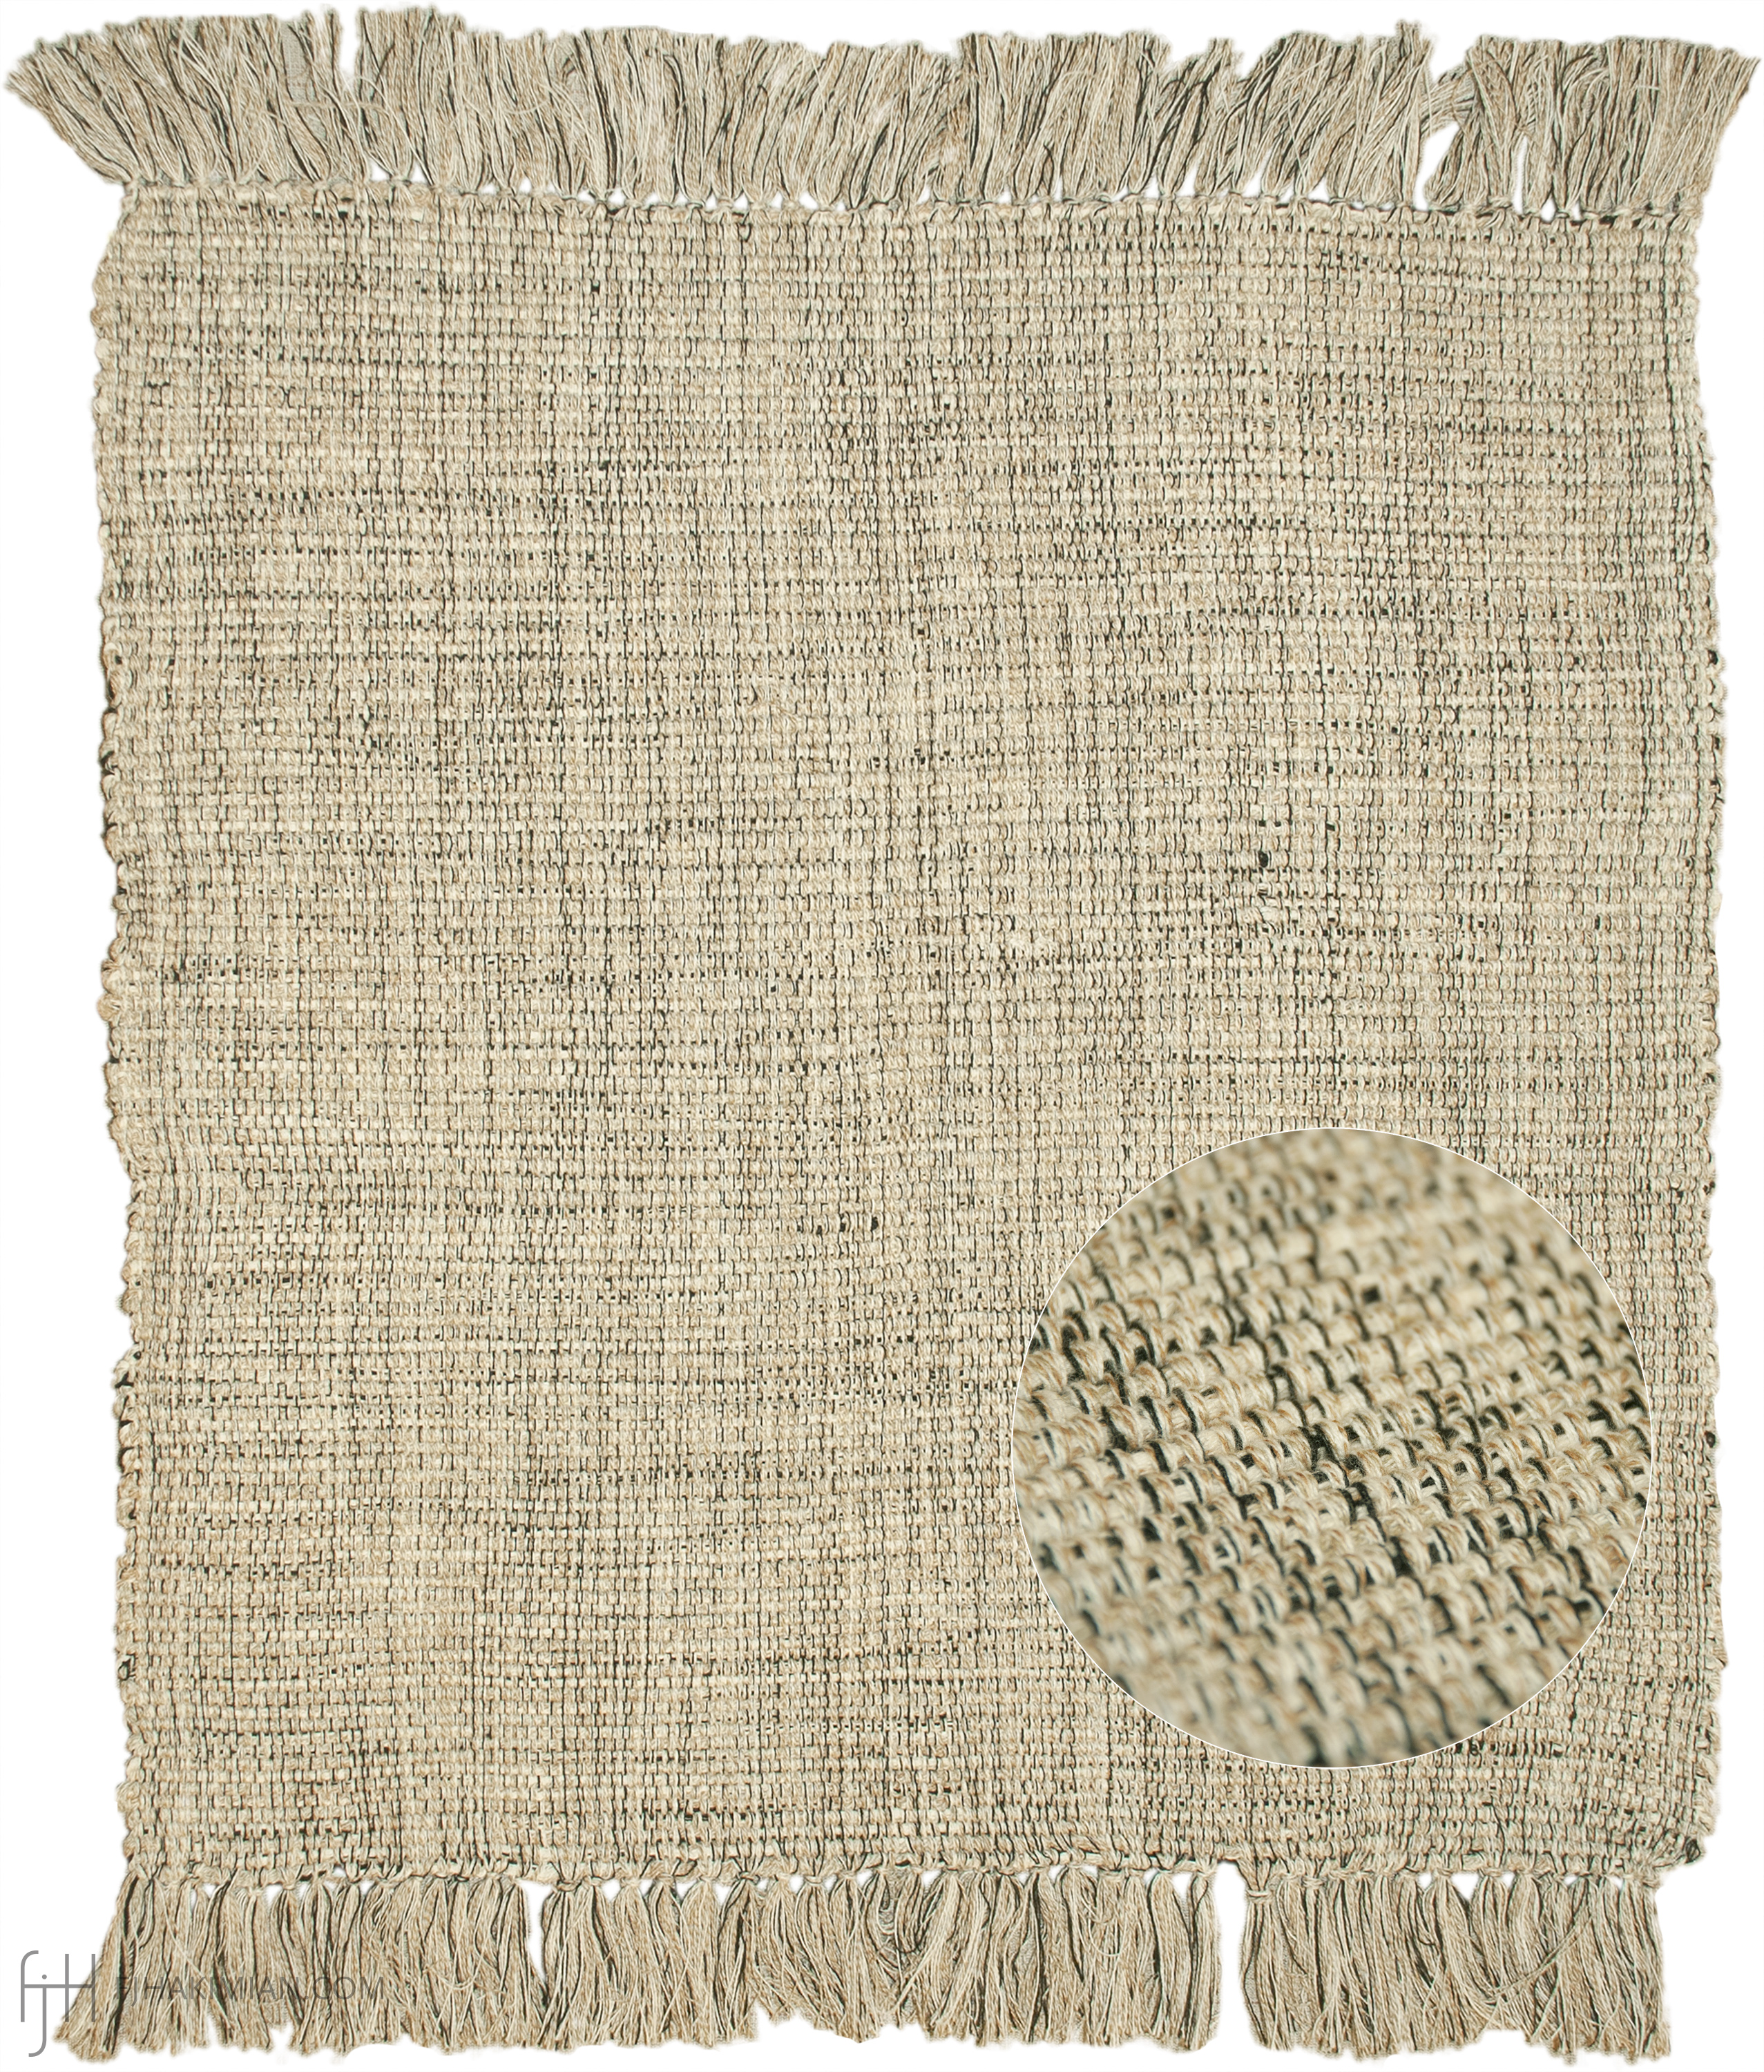 WY-HME04 | Custom South American Carpet | FJ Hakimian | Carpet Gallery in NYC